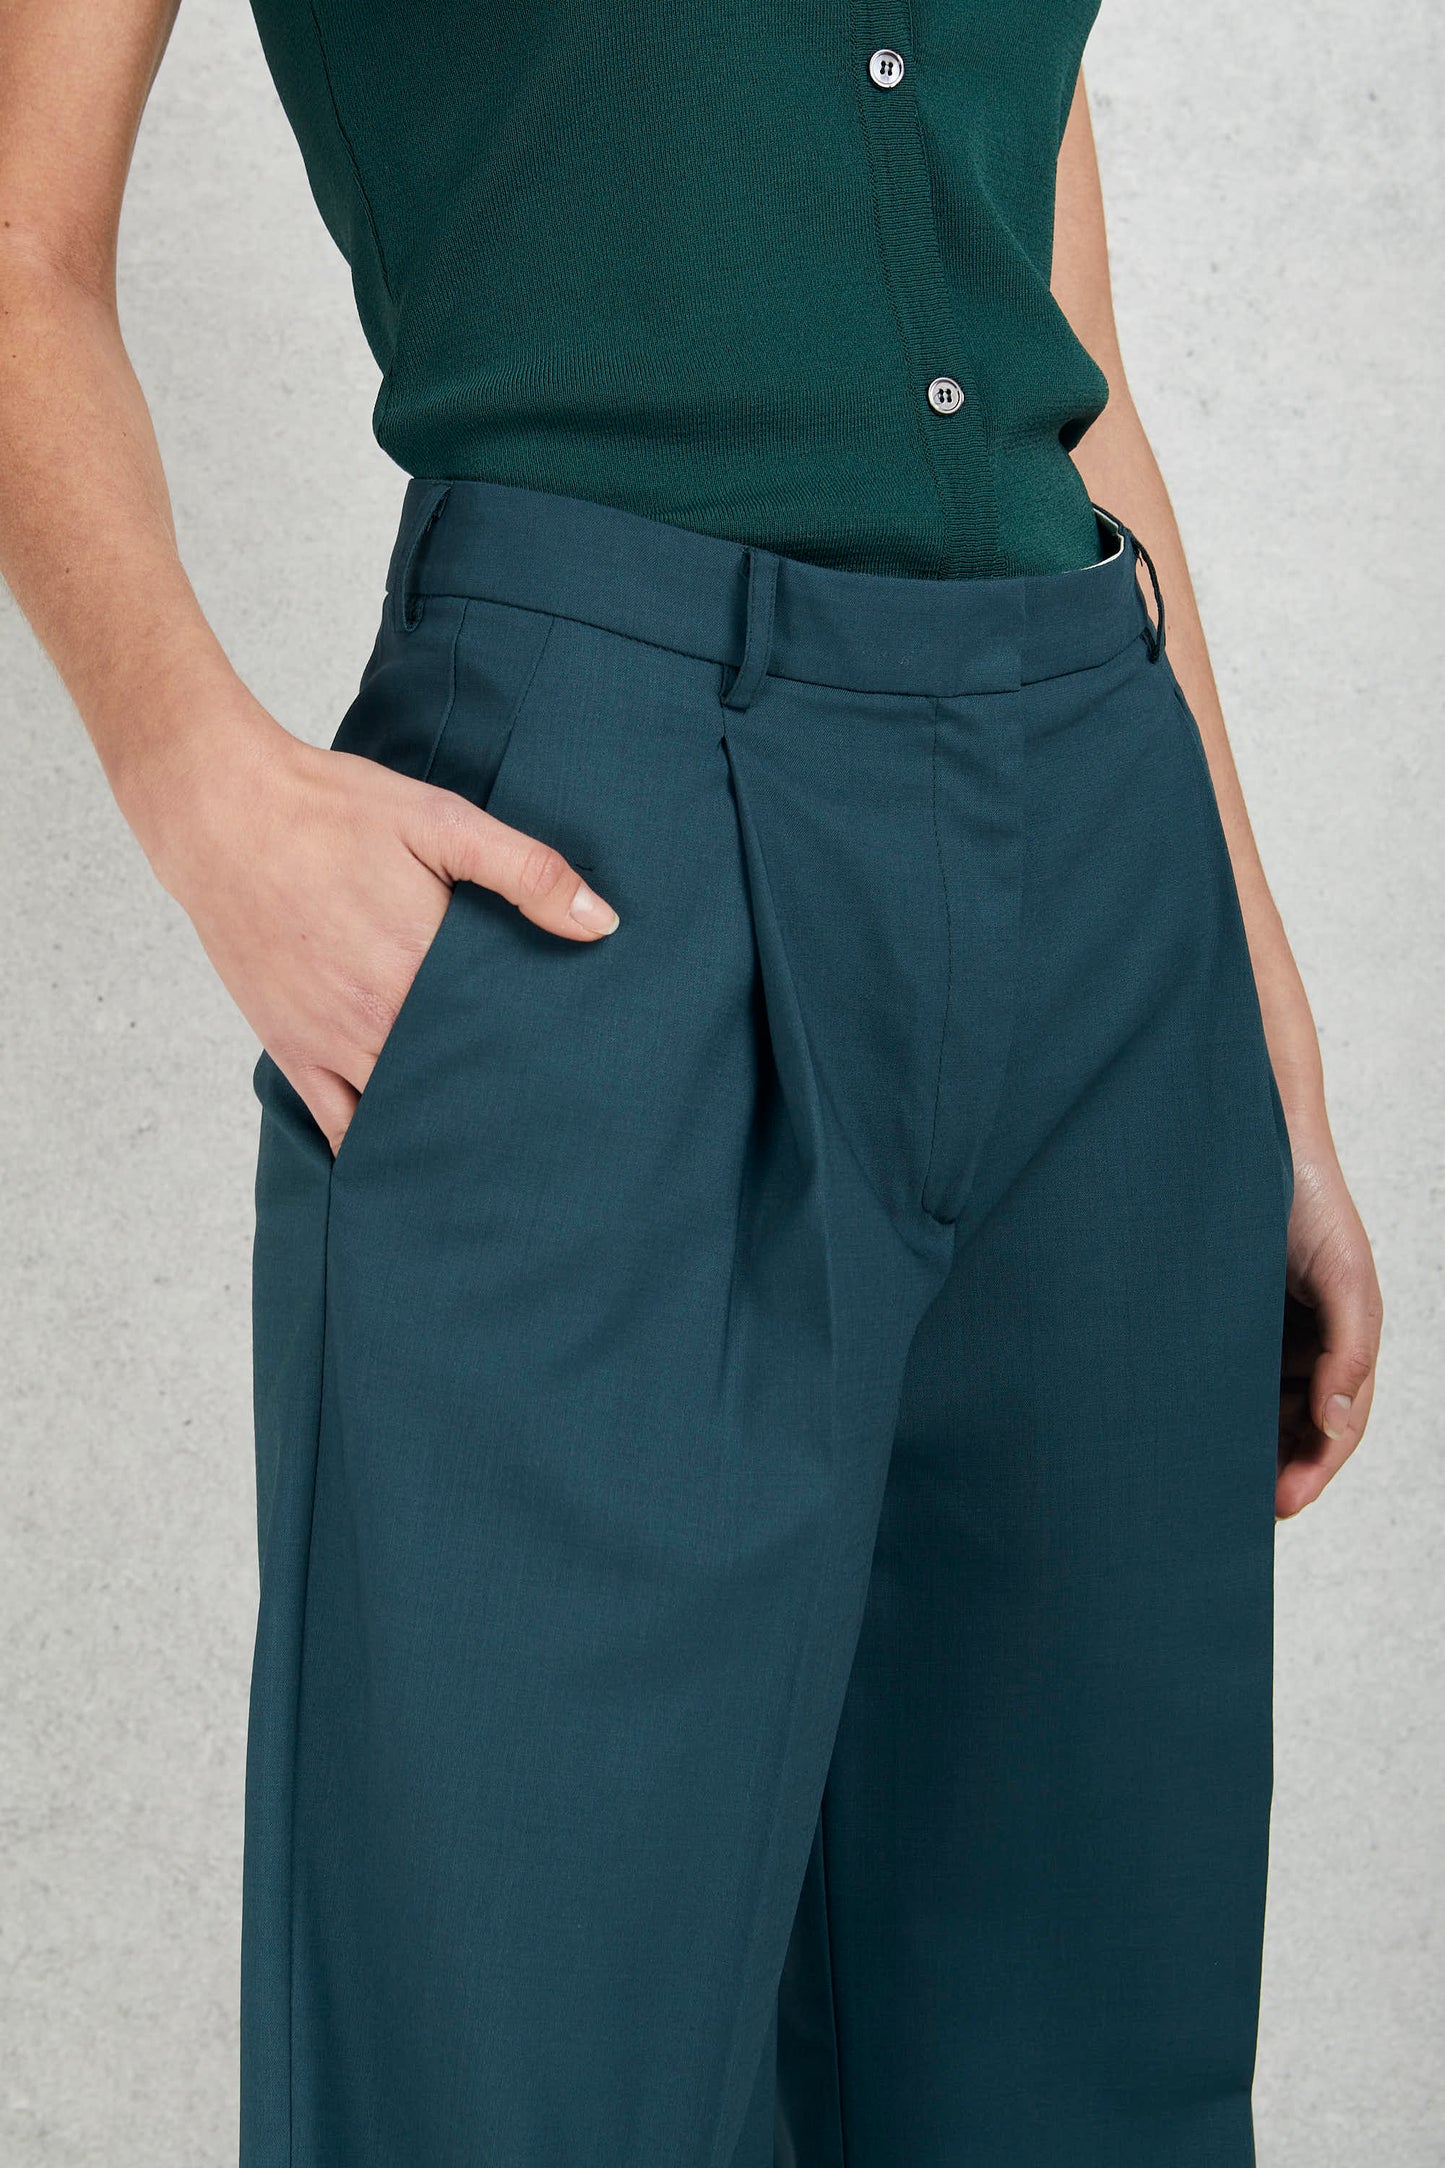  Grifoni Pantalone Verde Verde Donna - 6